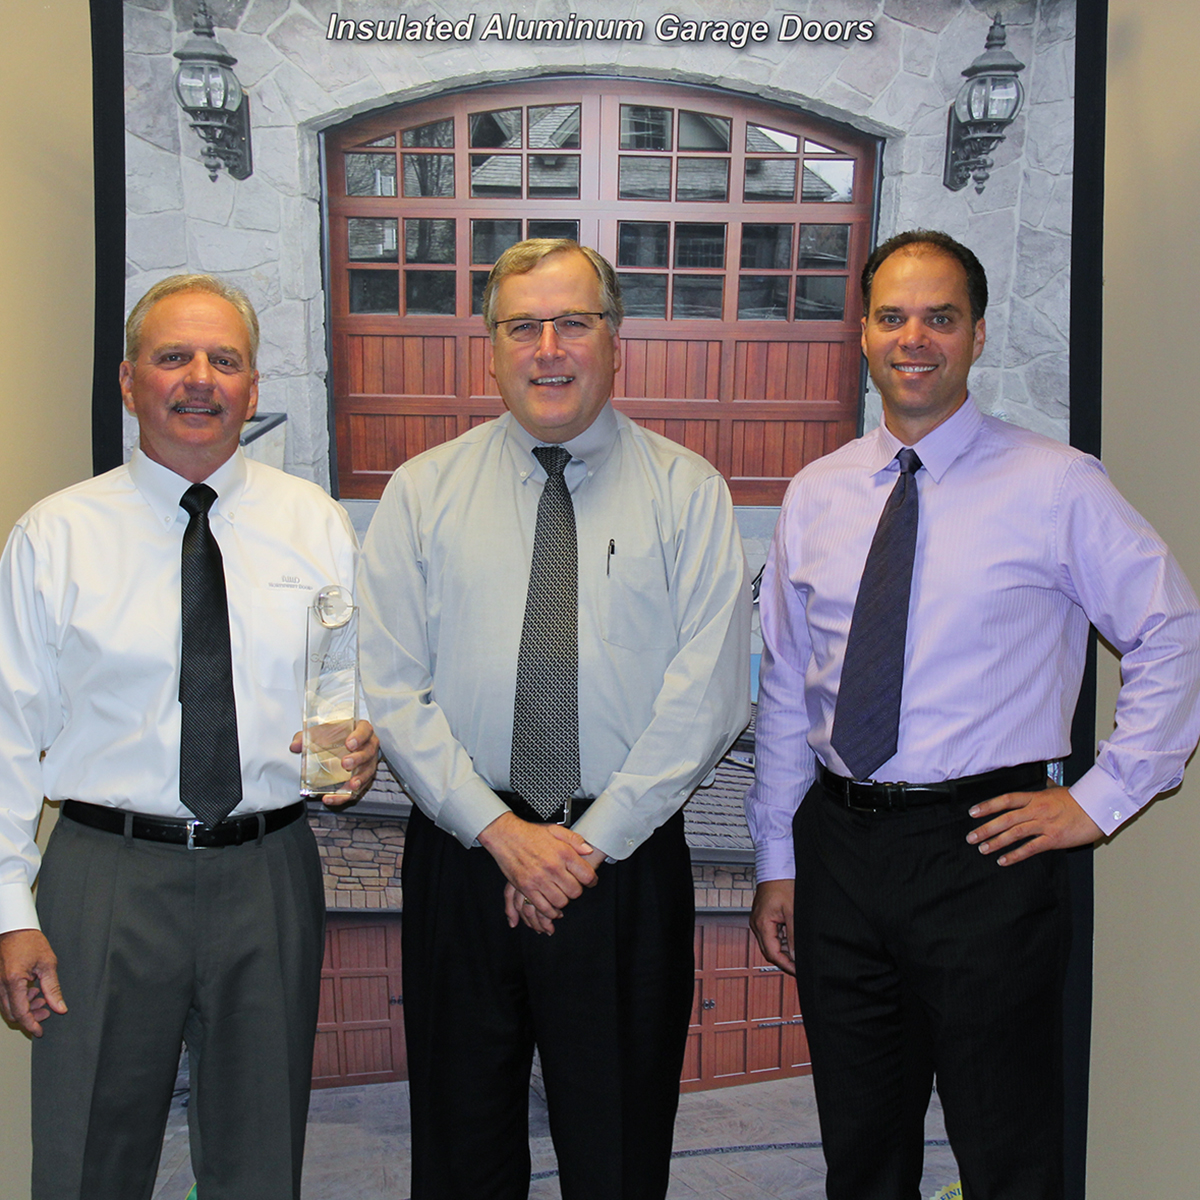 Left to Right: Steve DeWitt – CEO, Jeff Hohman – President, Scott DeWitt – Vice President